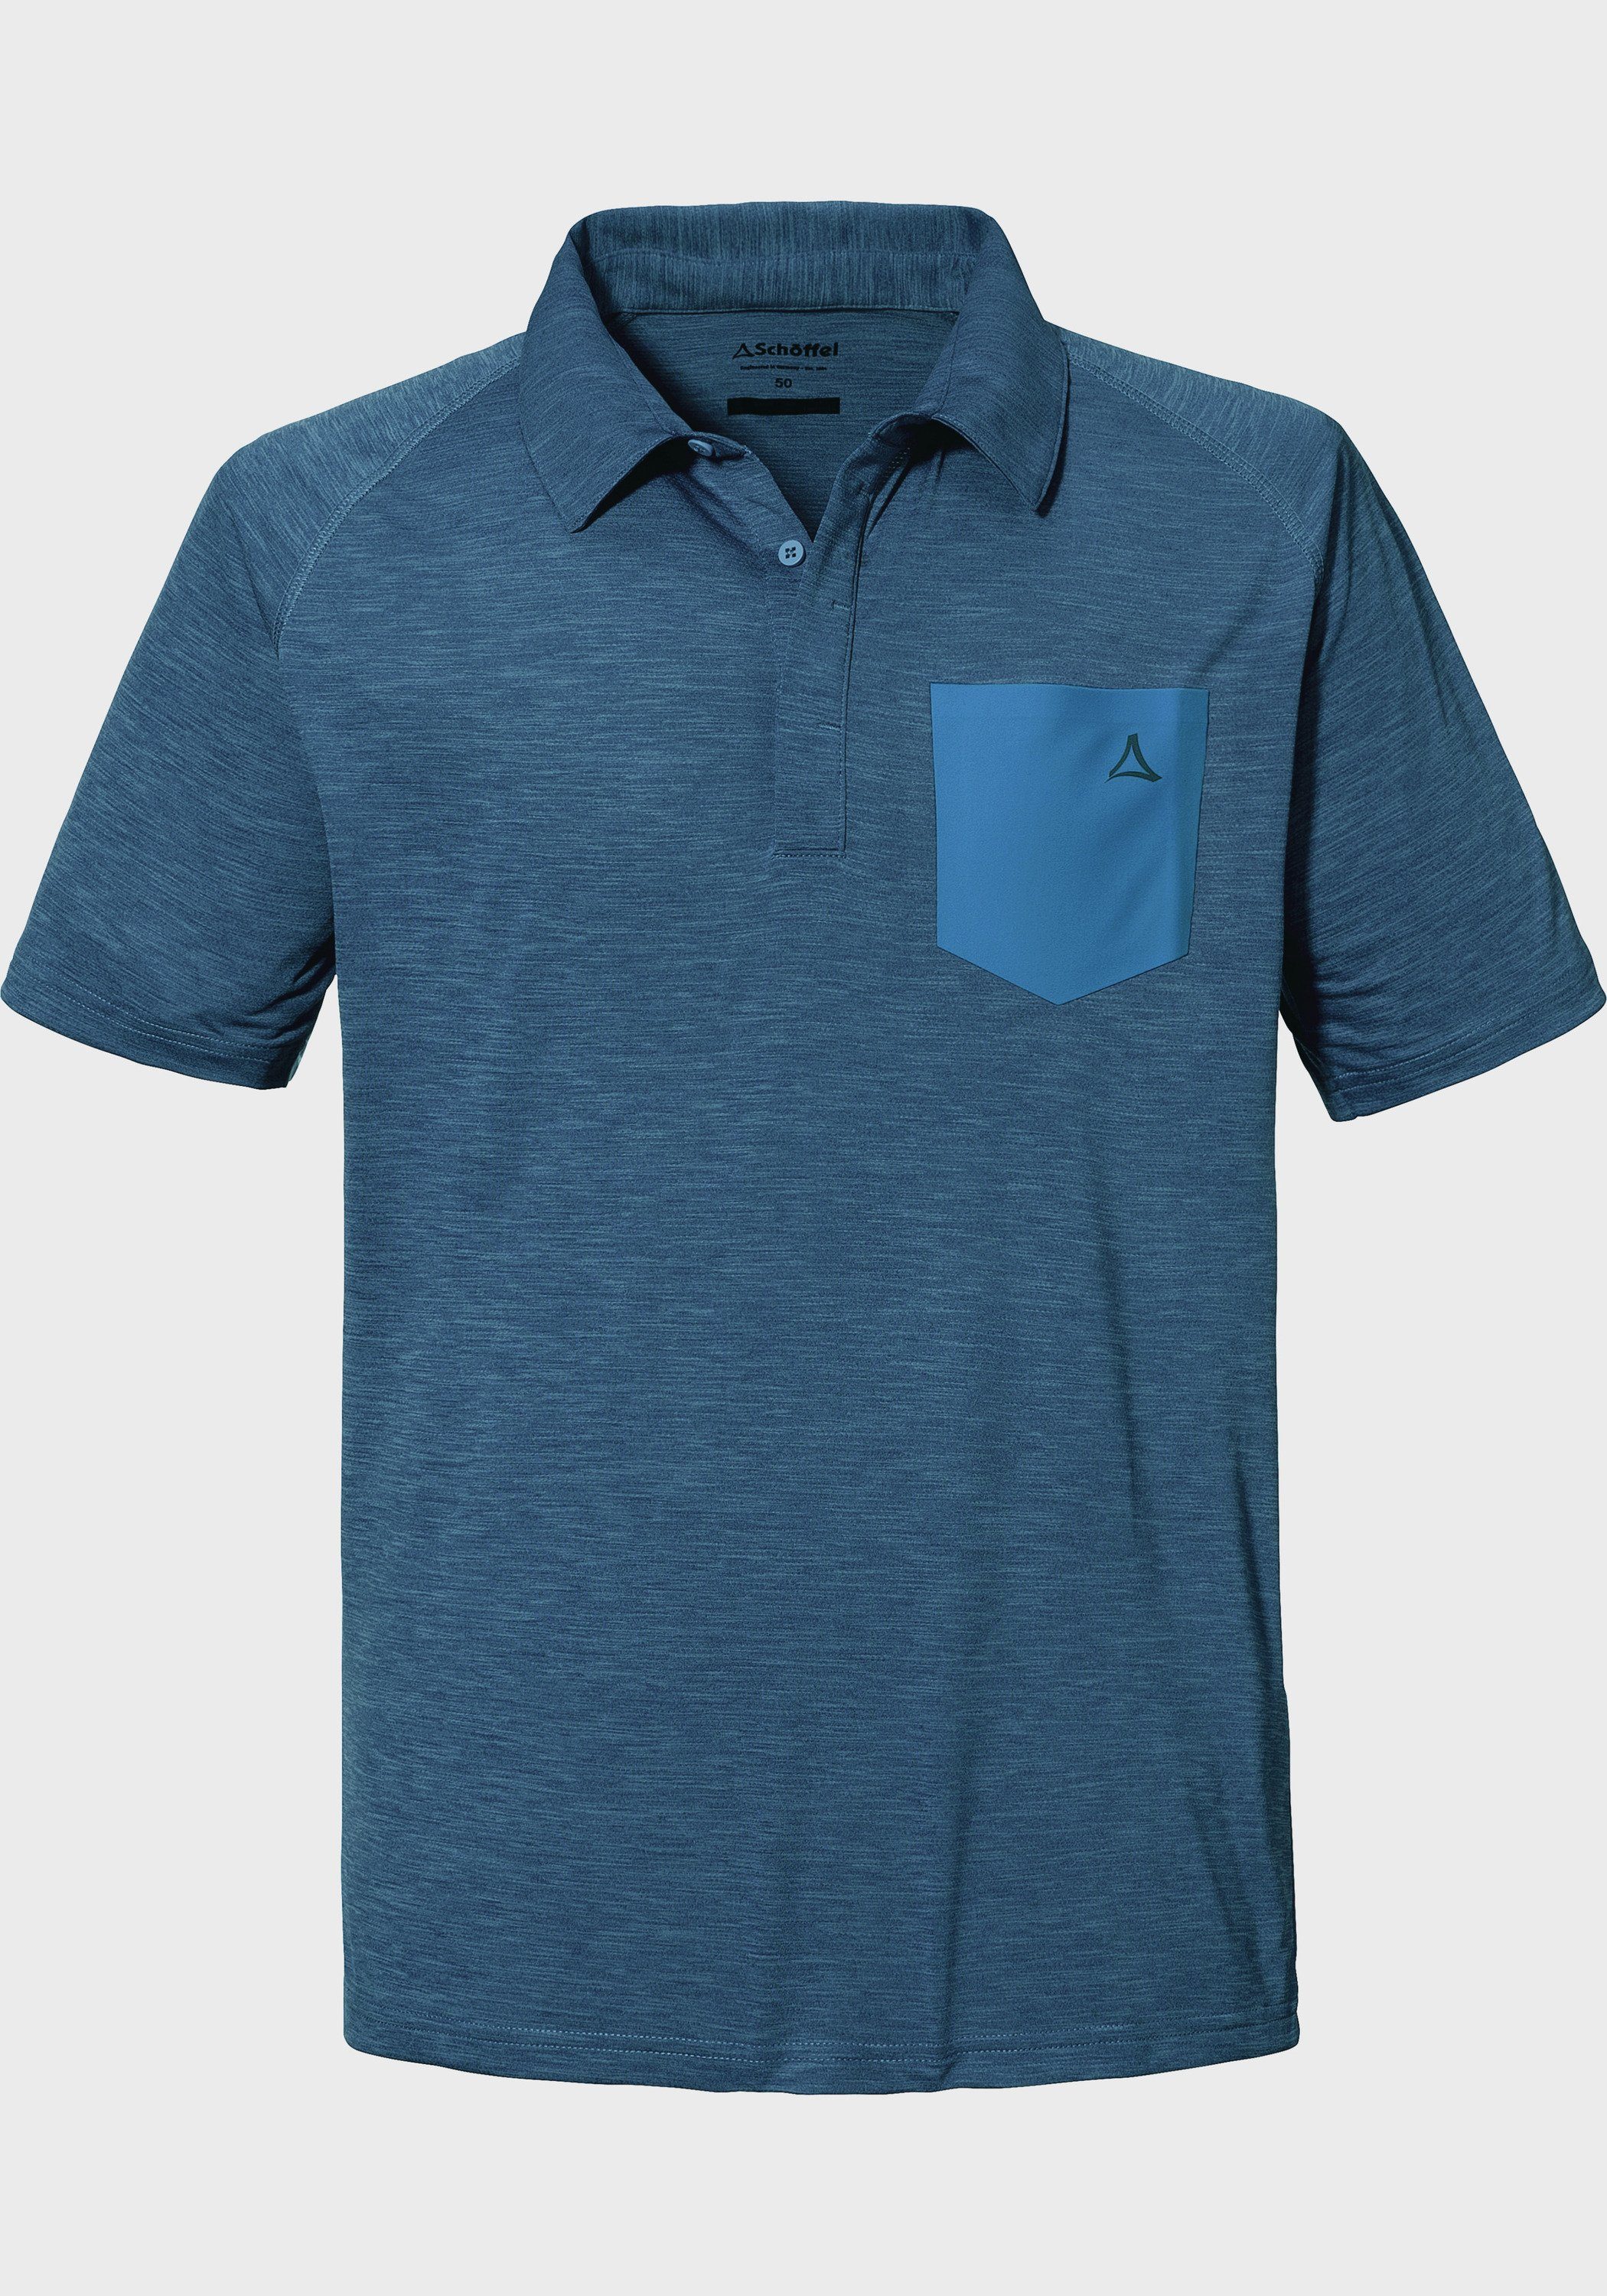 Schöffel Poloshirt Shirt Polo Hocheck blau M